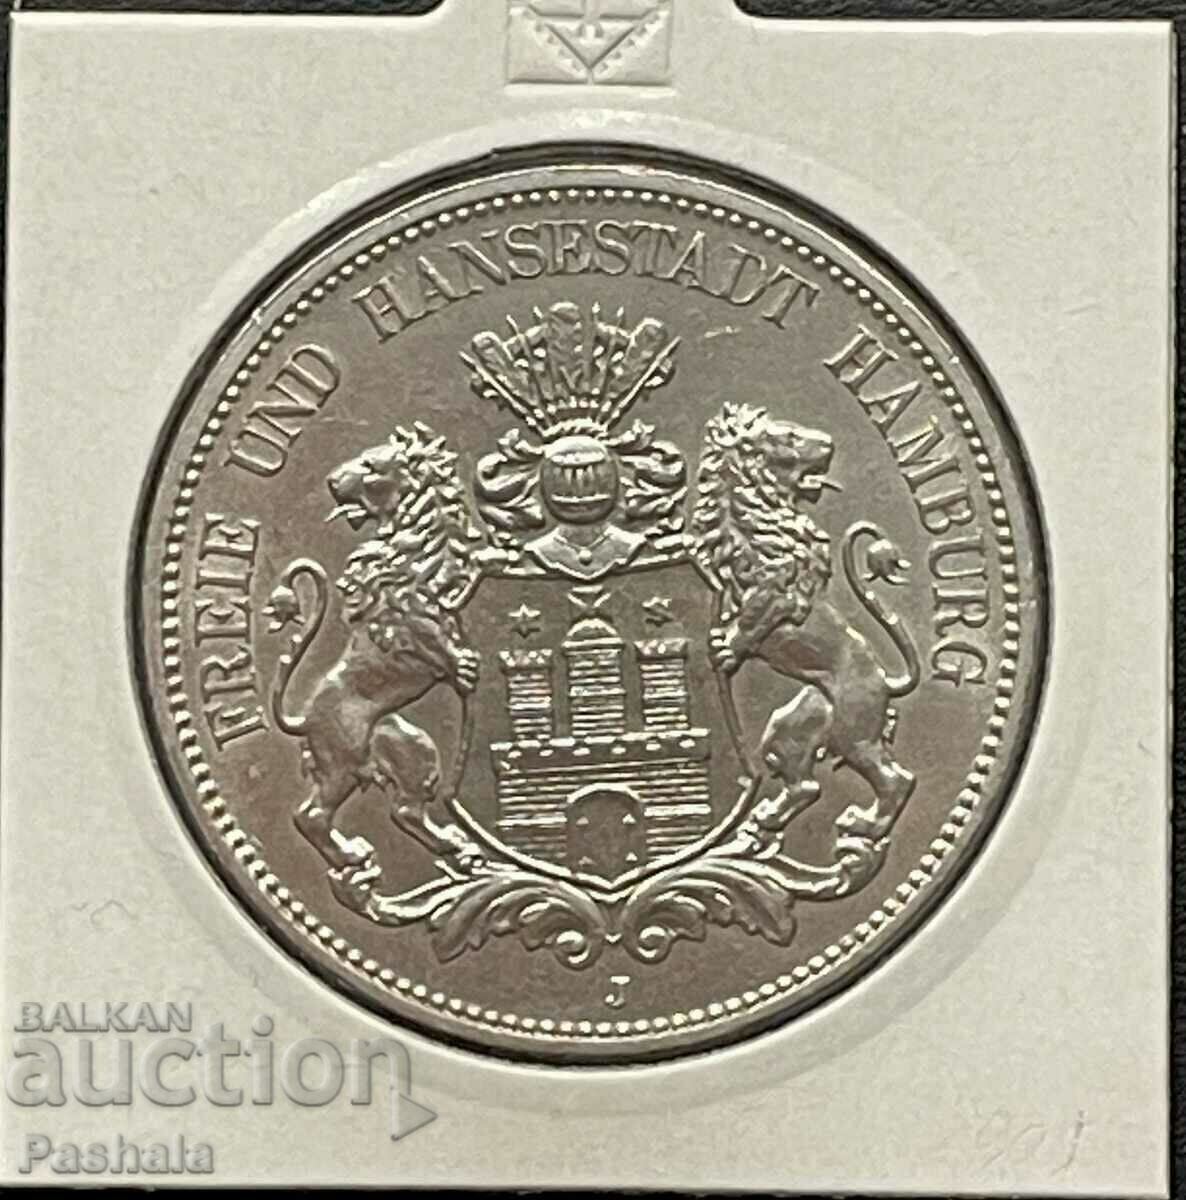 Германия 5 марки 1913 г. Хамбург . Рядка .